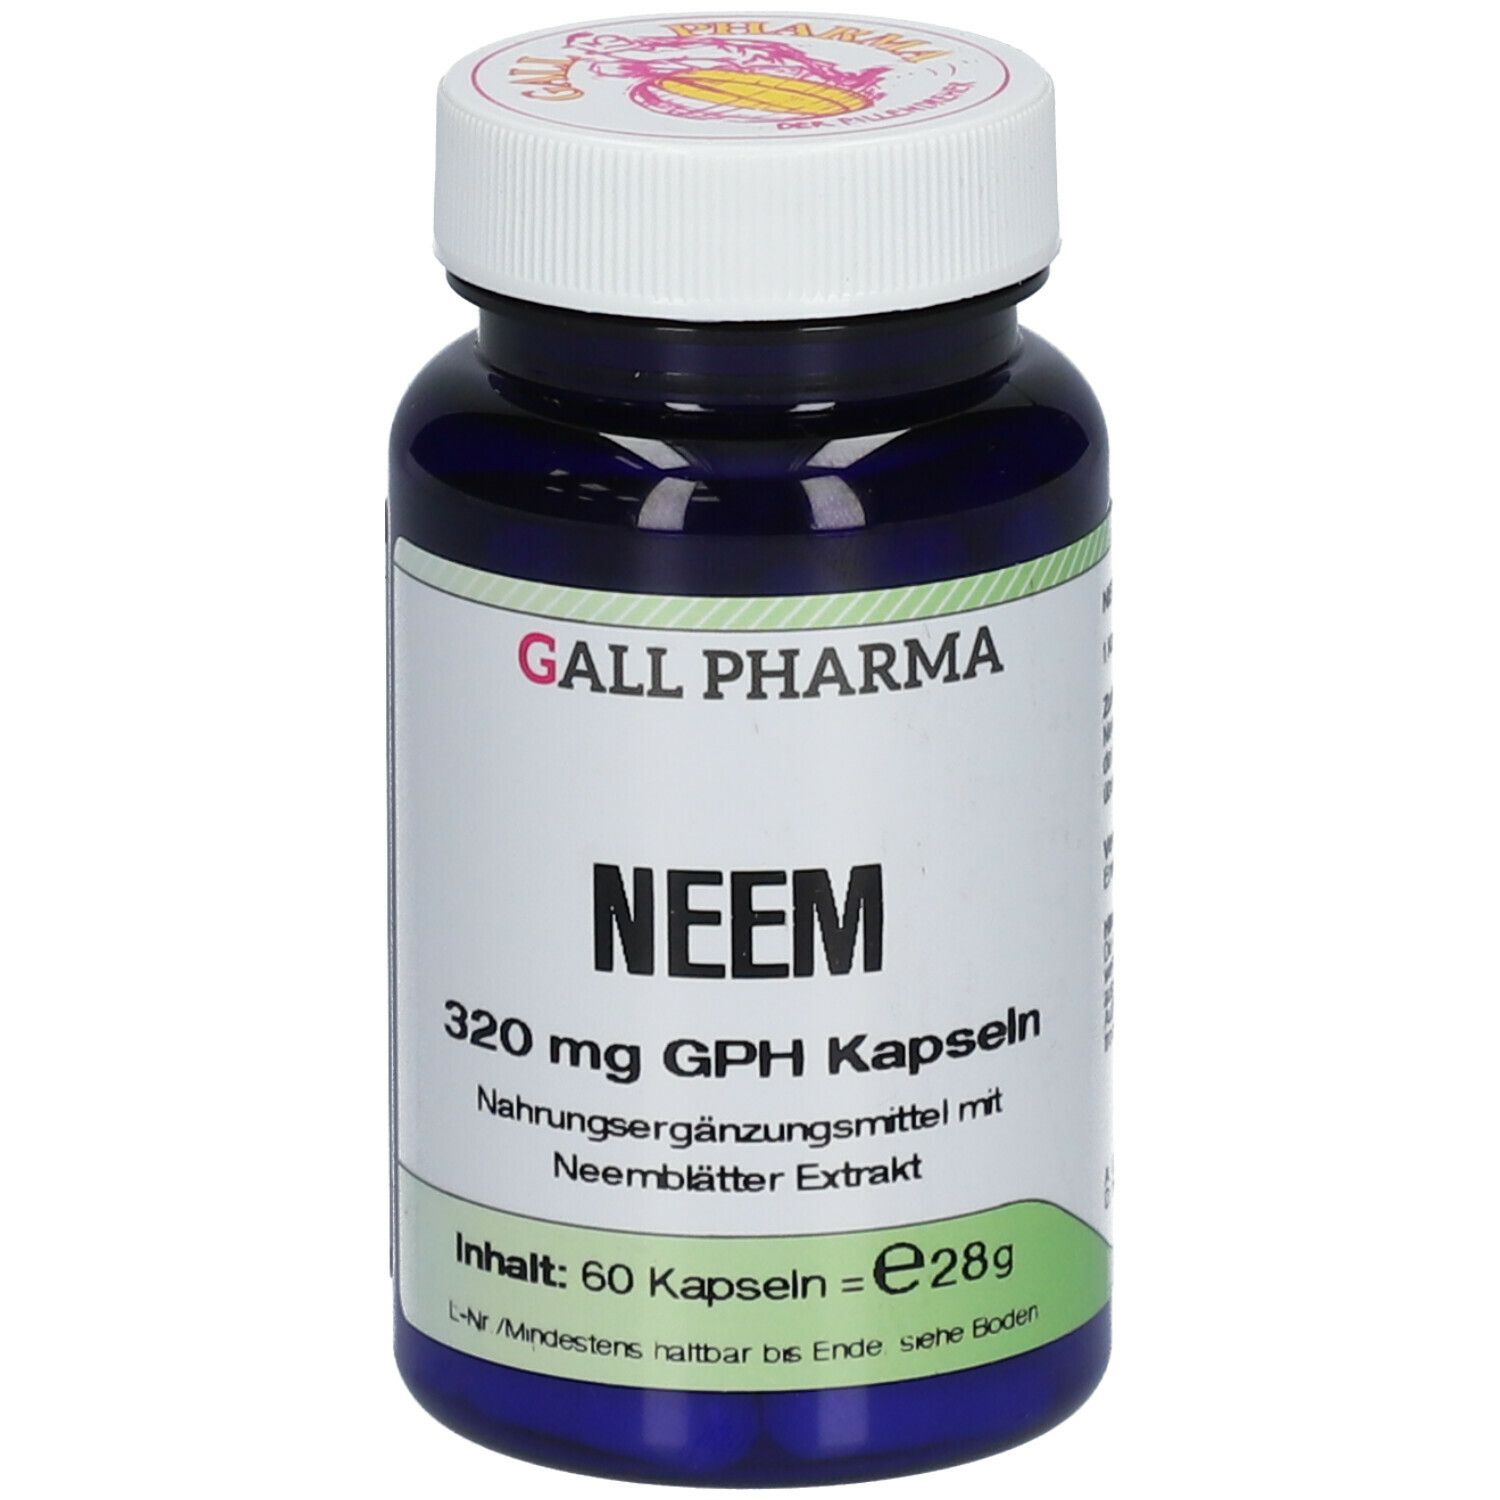 GALL PHARMA NEEM 320 mg GPH Kapseln